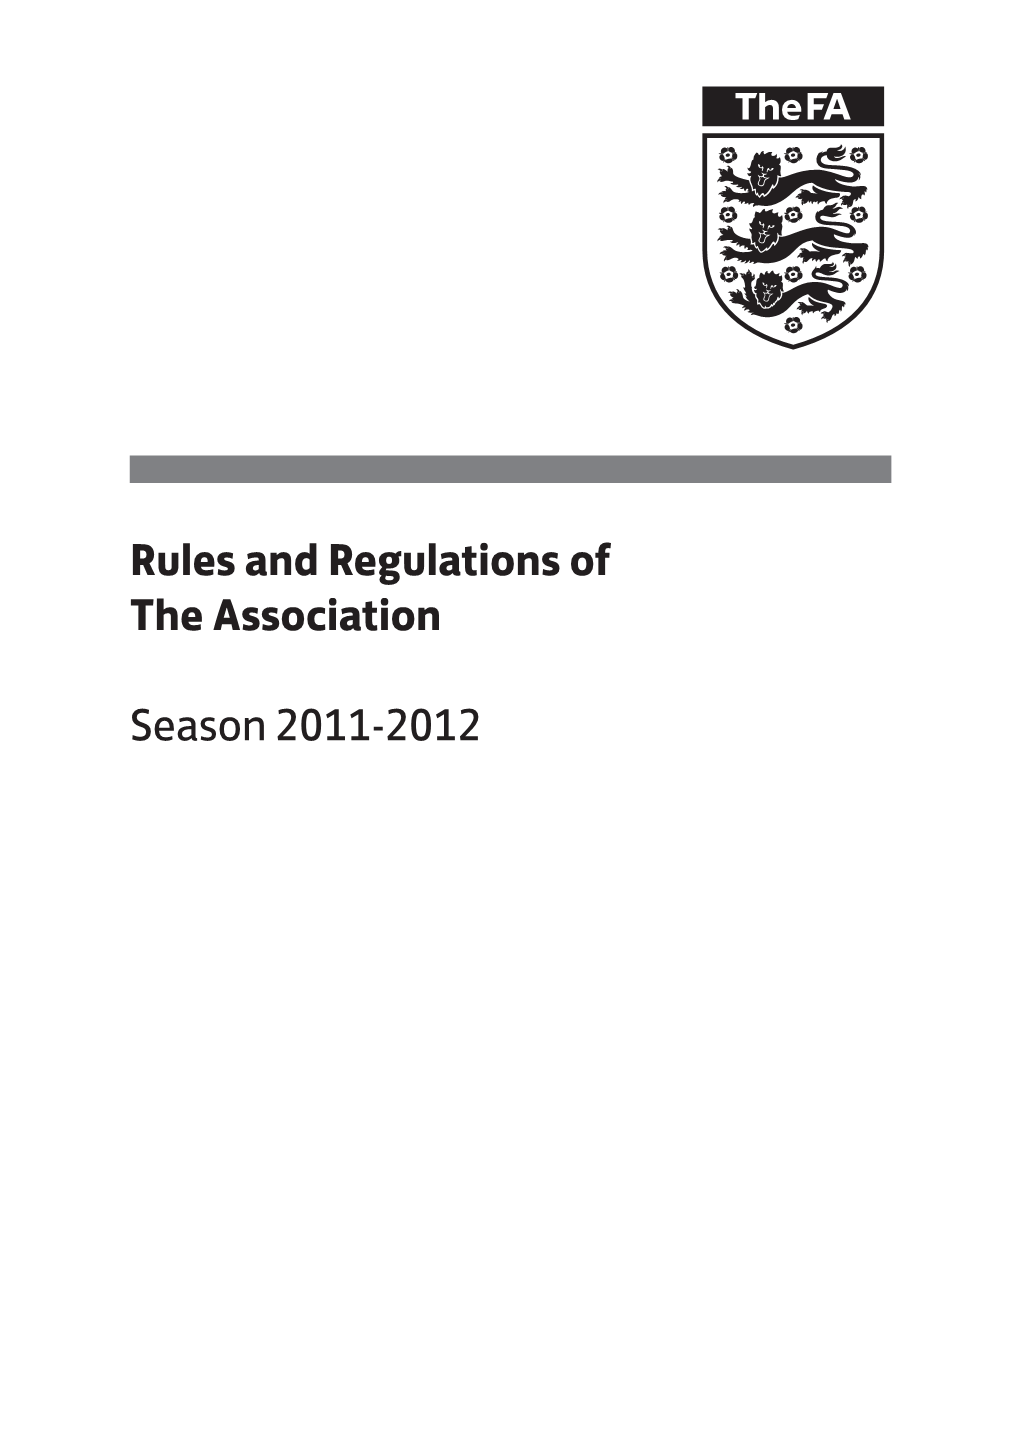 FA Handbook 2011-12